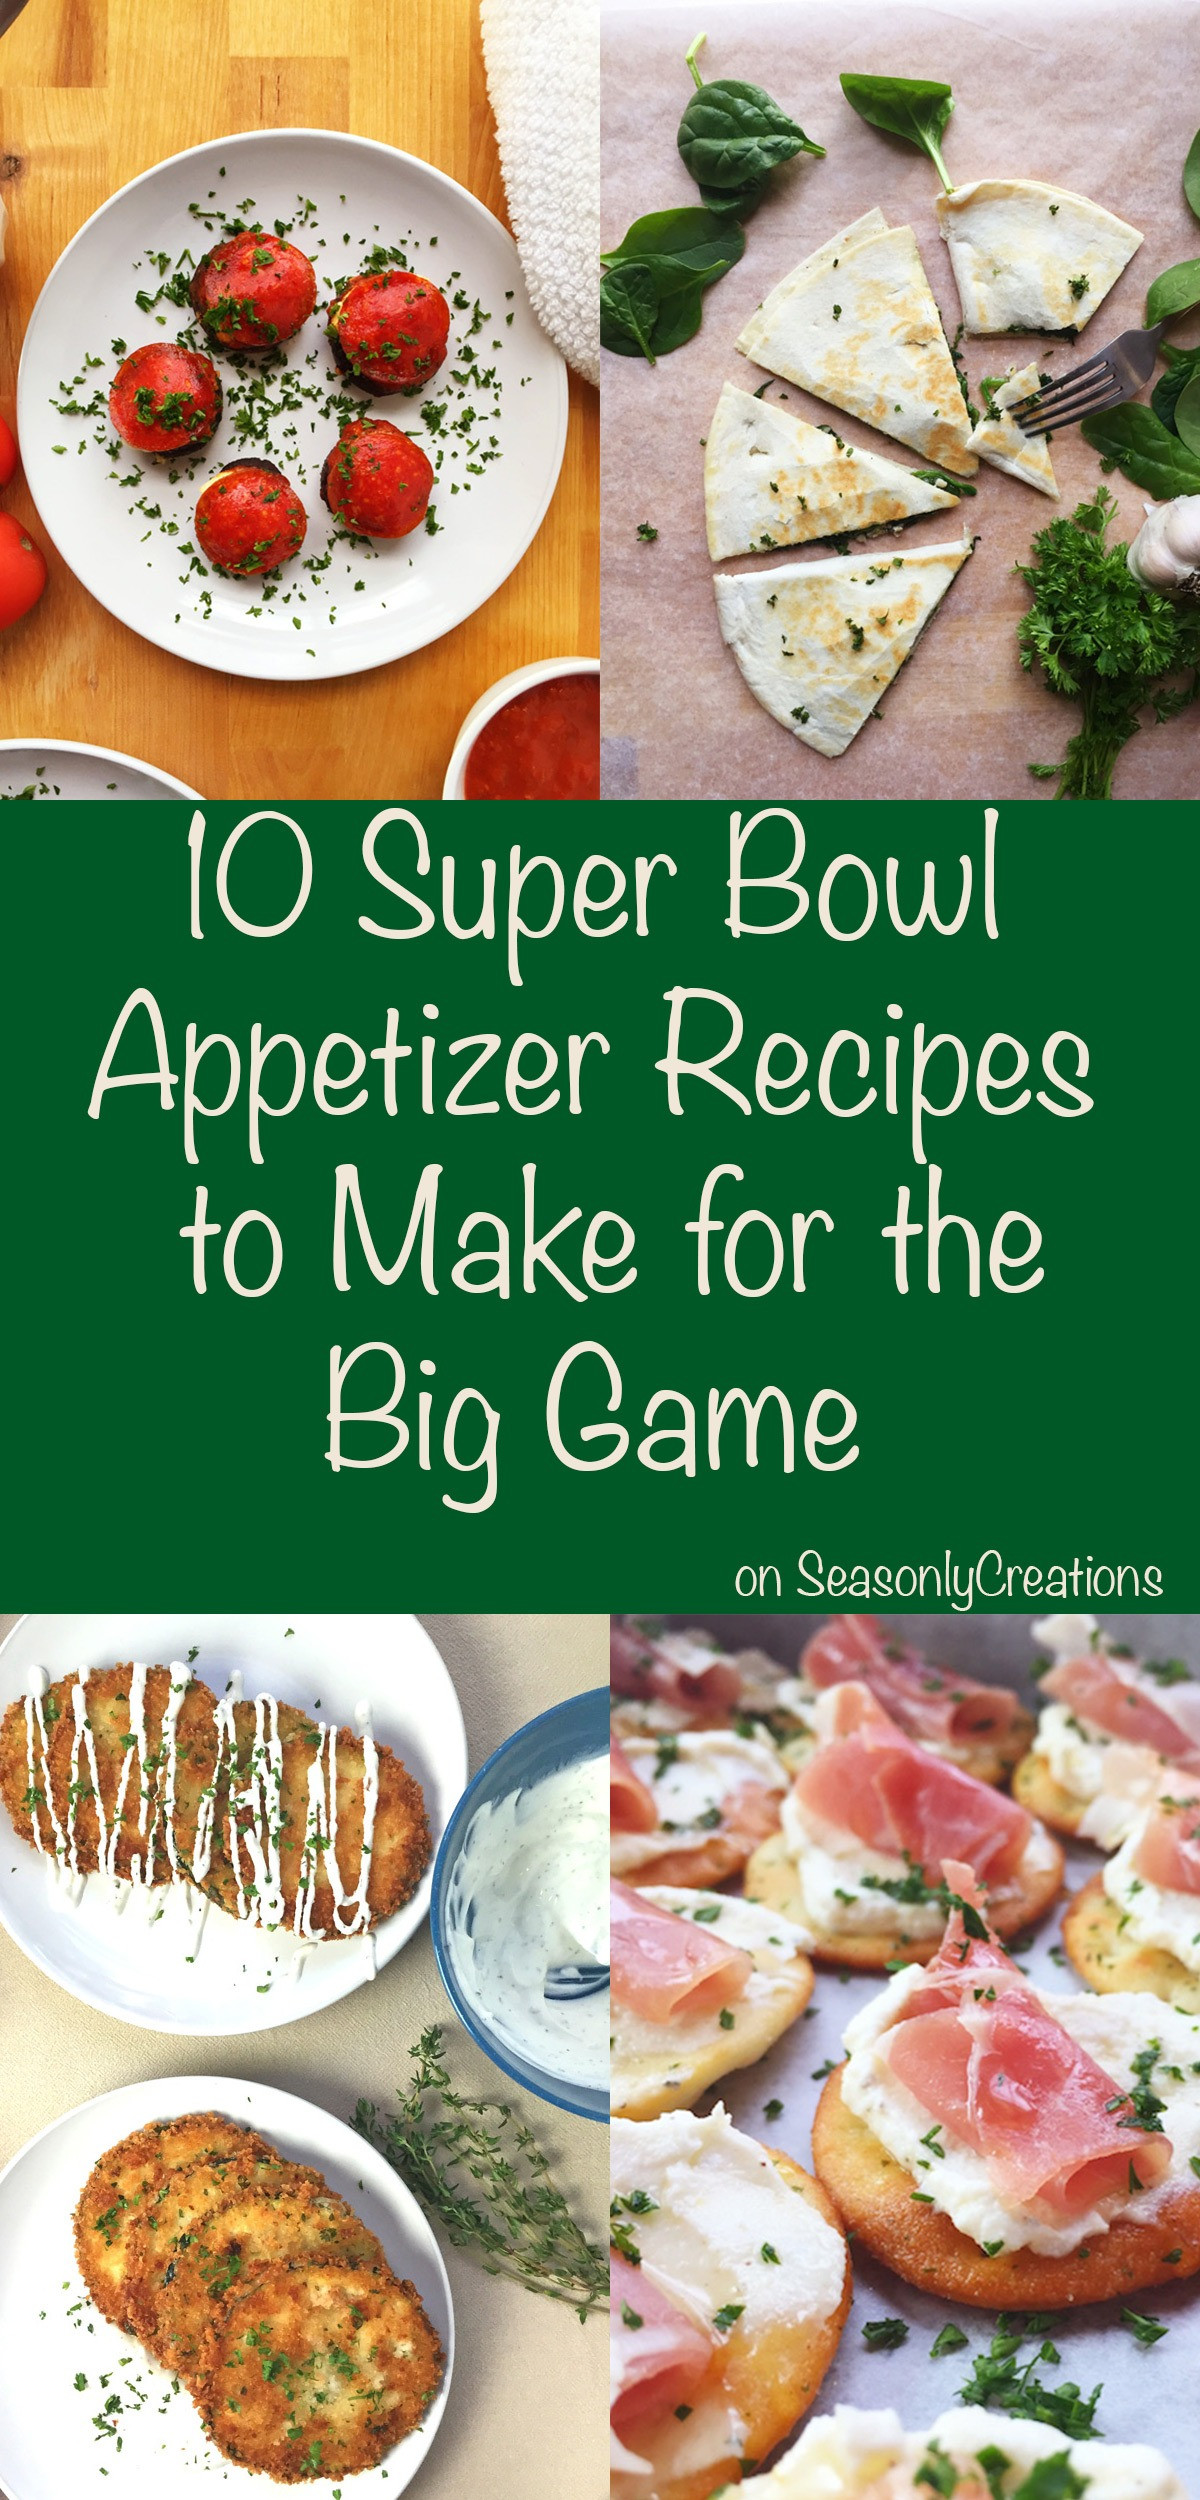 Super Bowl Menus And Recipes
 10 Super Bowl Appetizer Recipes to Make for the Big Game